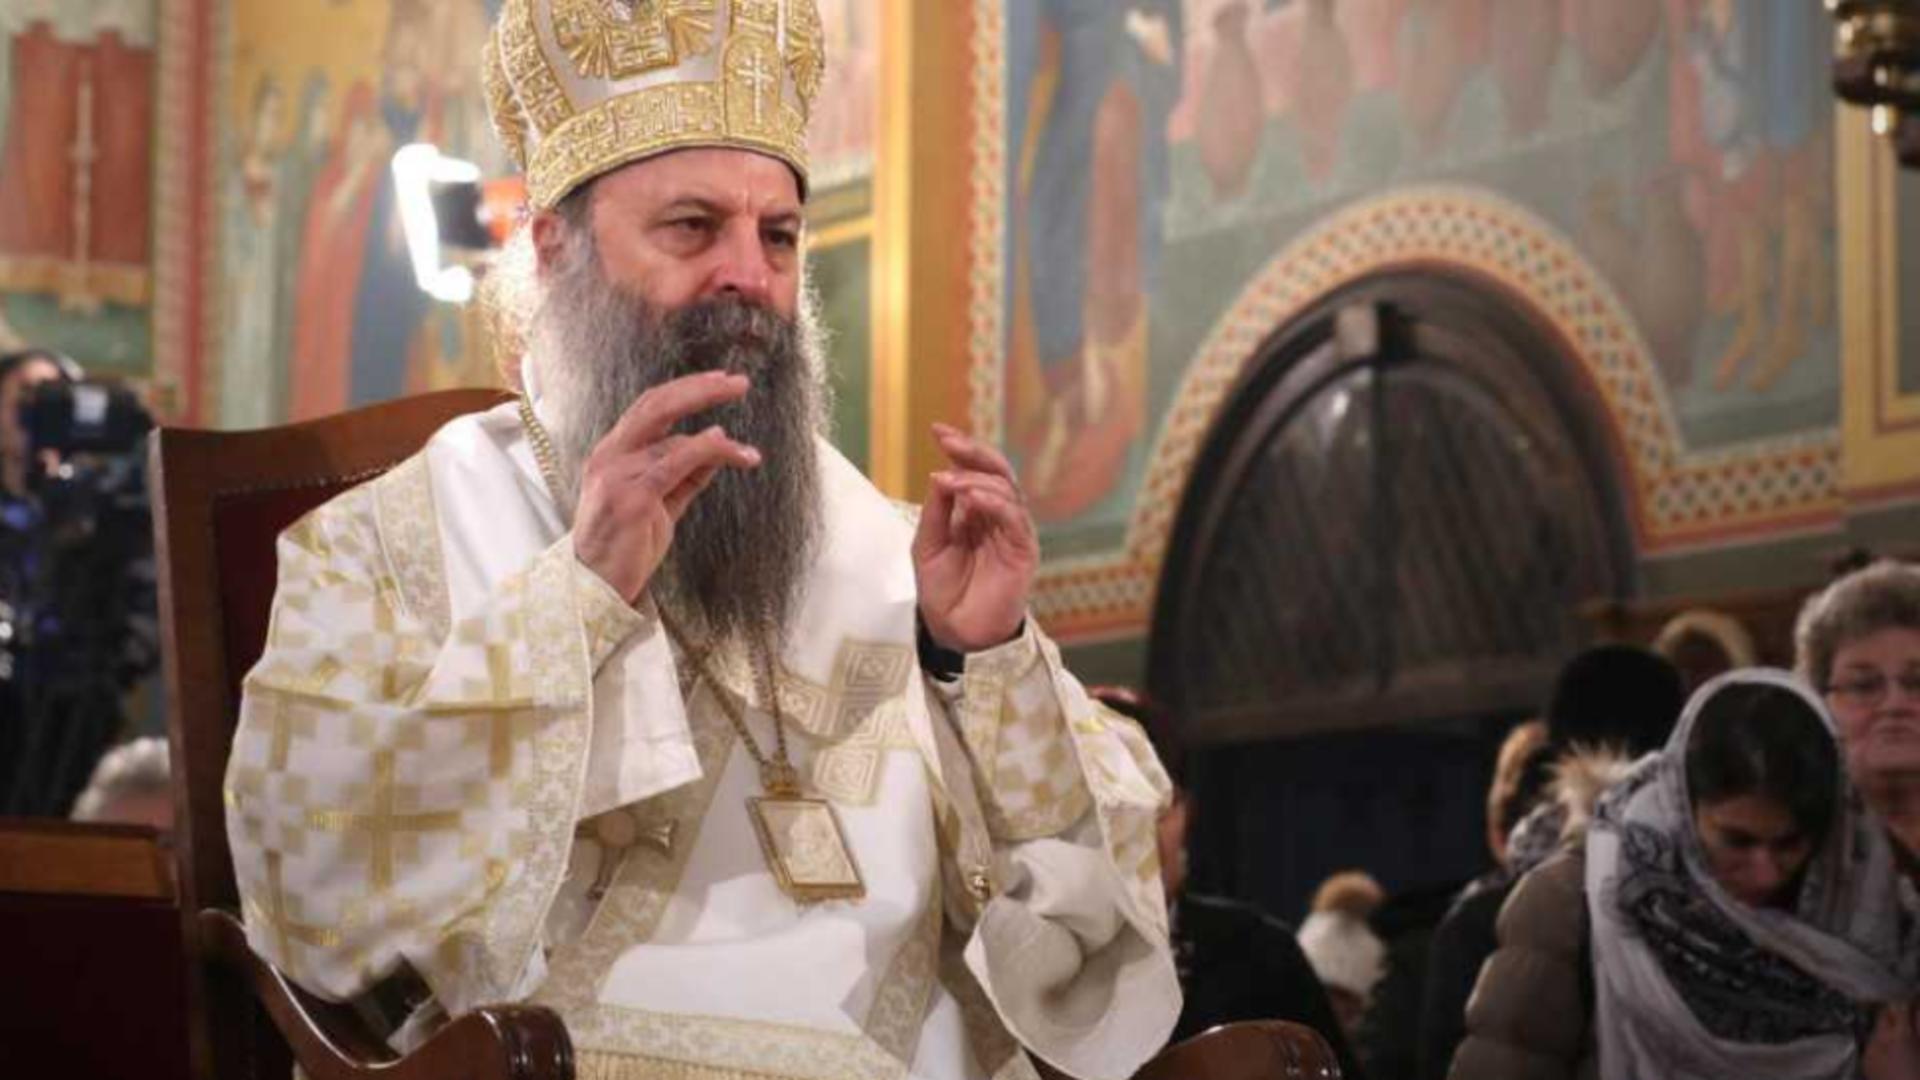 Patriarhul ortodox al Serbiei - Porfirie, confirmat COVID-19 - Ce simptome prezintă Foto: basilica.ro